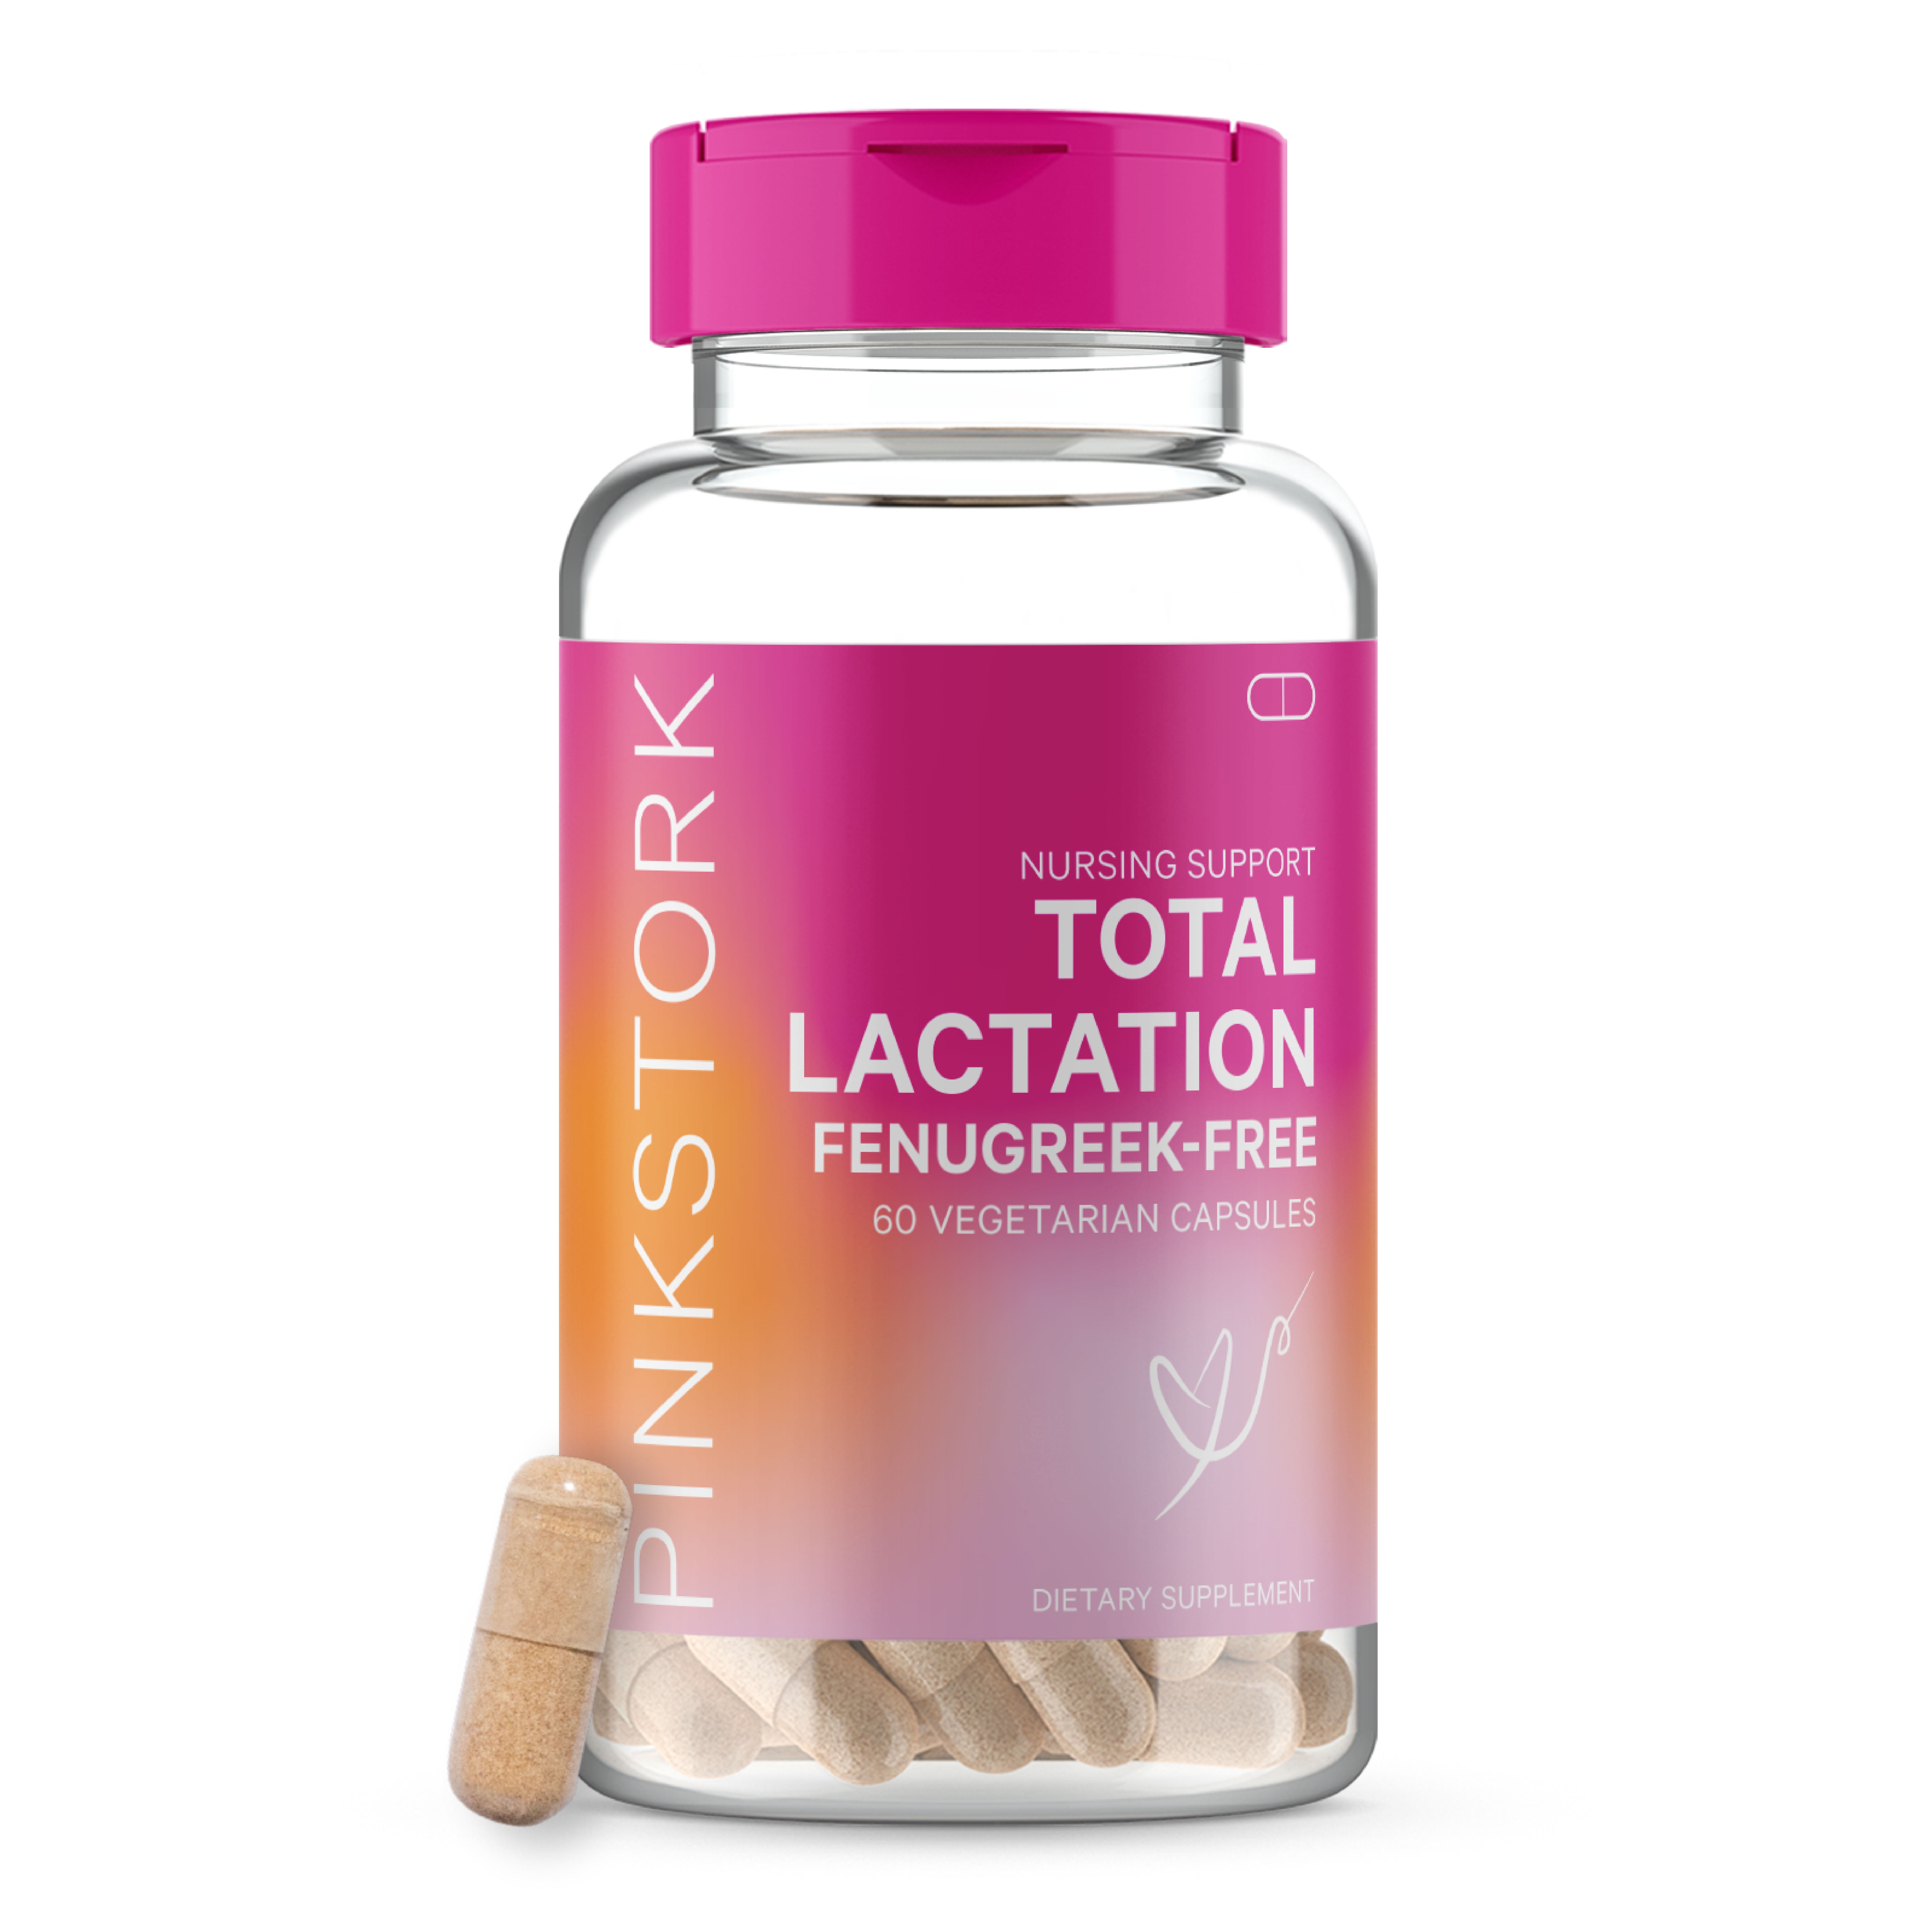 Pink Stork Lactation: Smooth Vanilla Nursing Tea